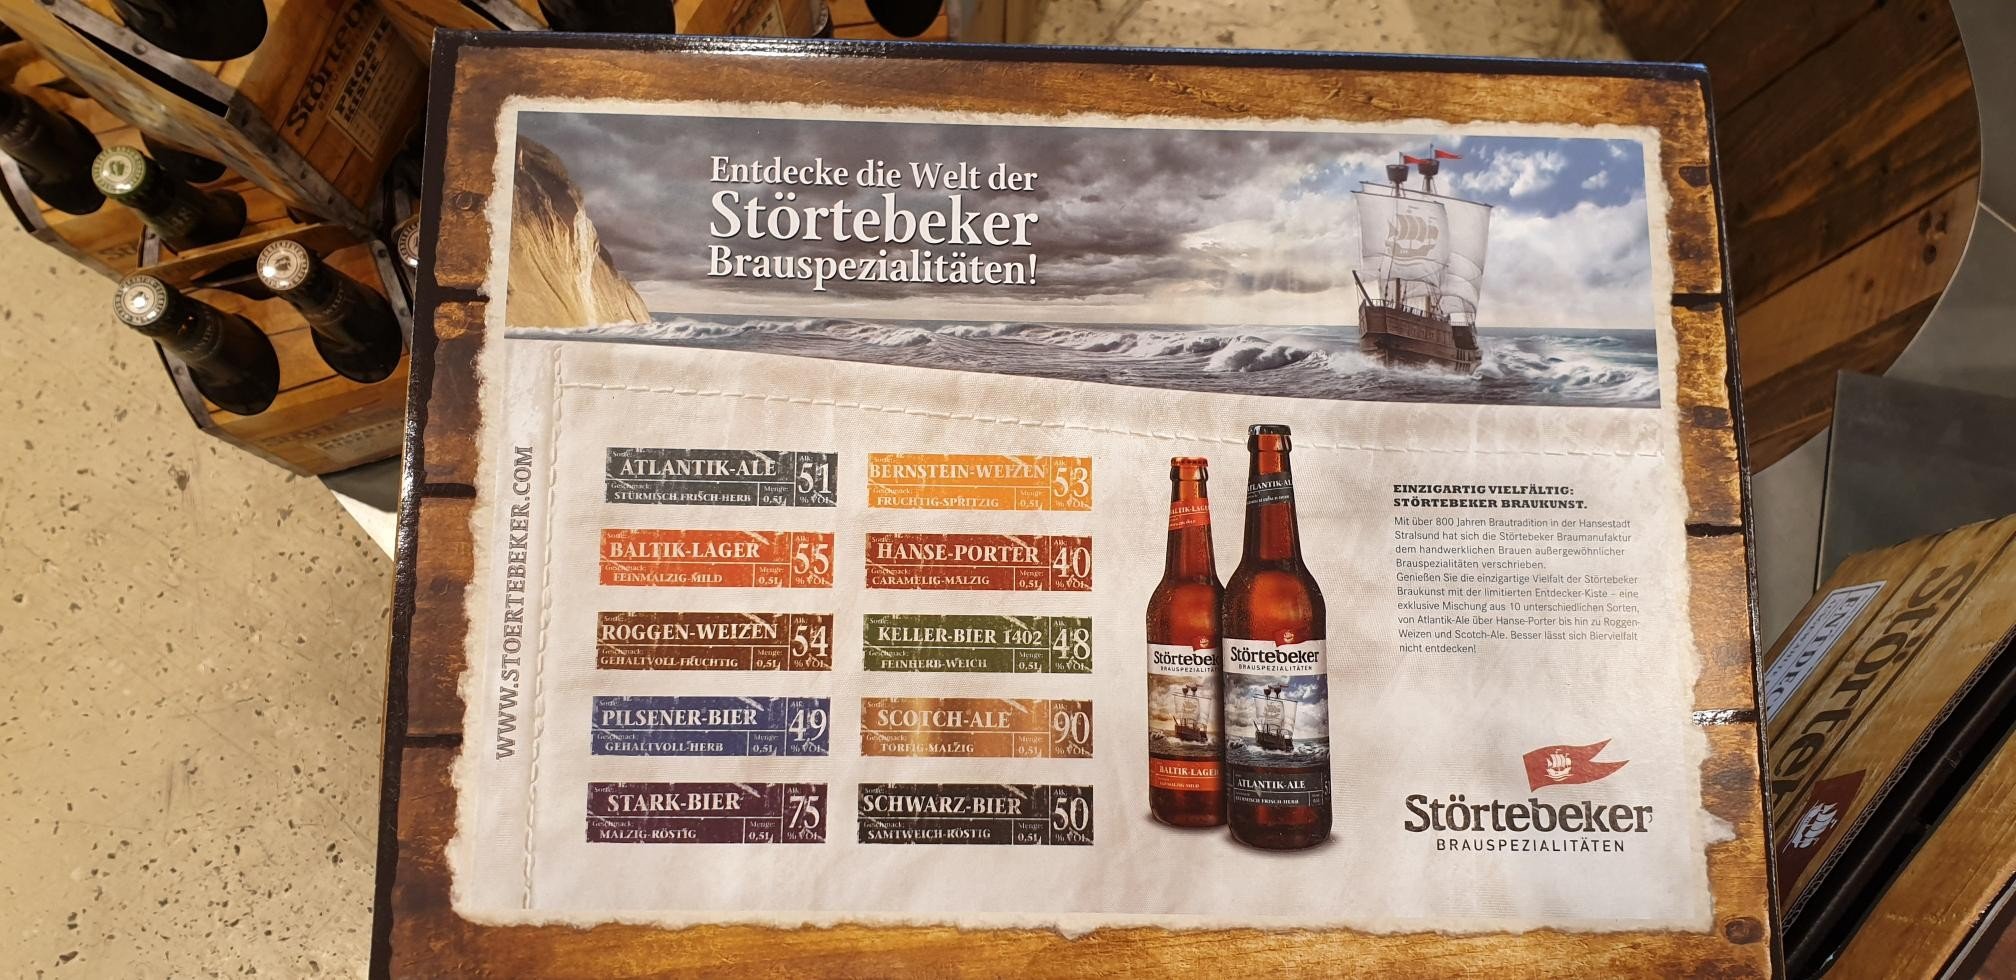 Störtebeker Brauspezialitäten brewery from Germany